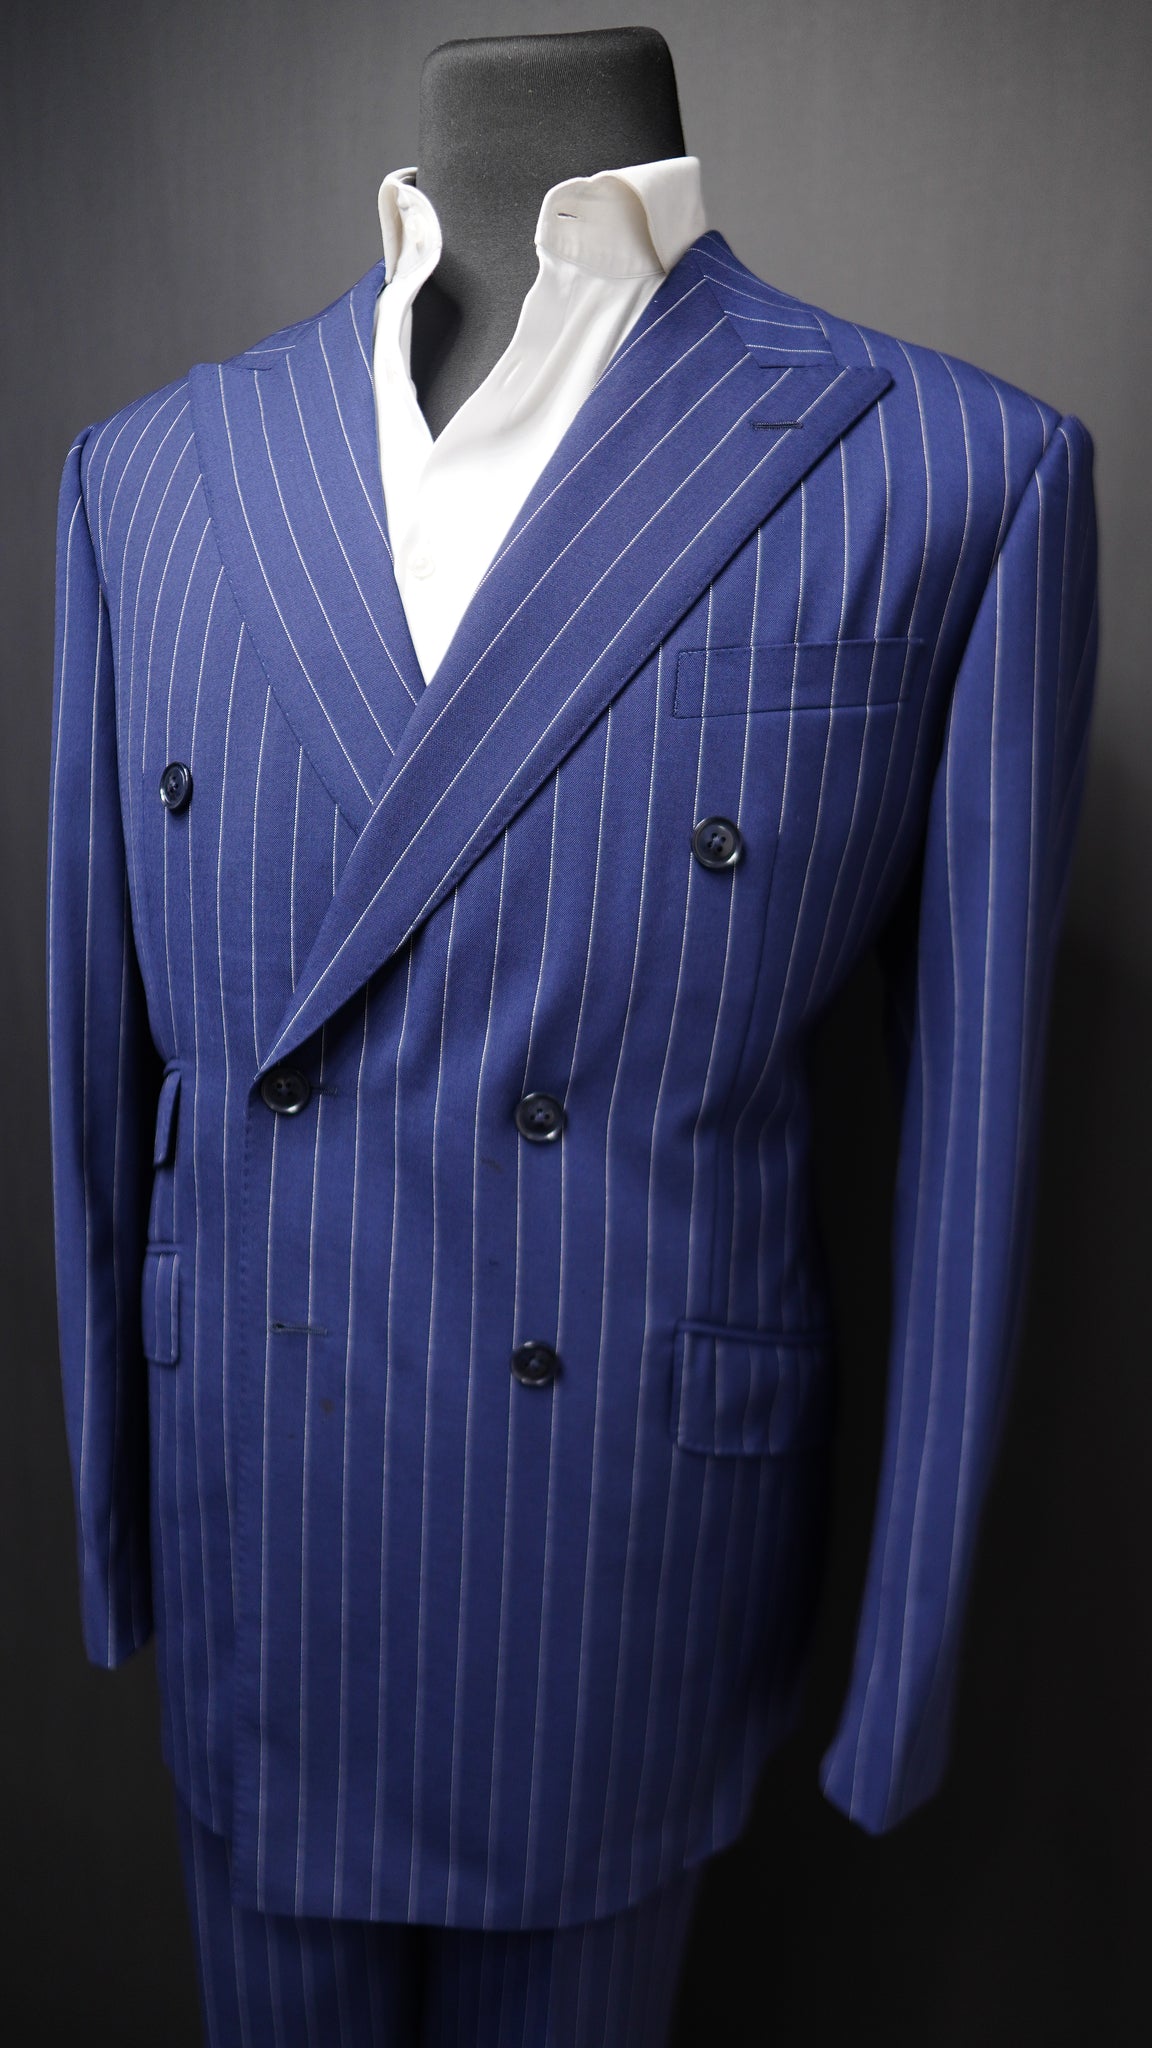 Navy Blue pinstripe suit